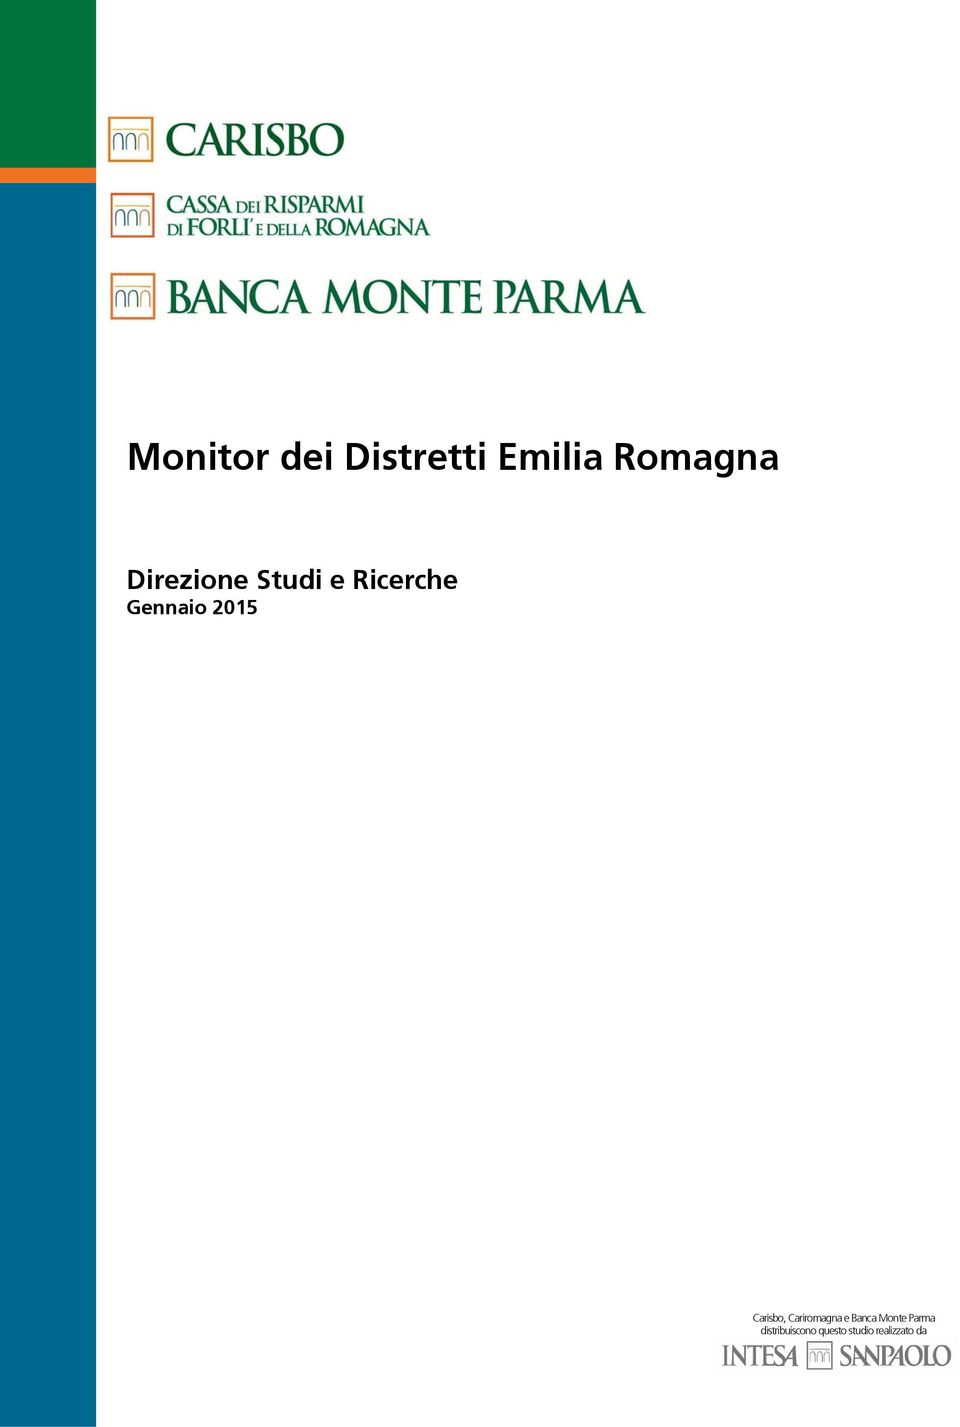 Cariromagna e Banca Monte Parma